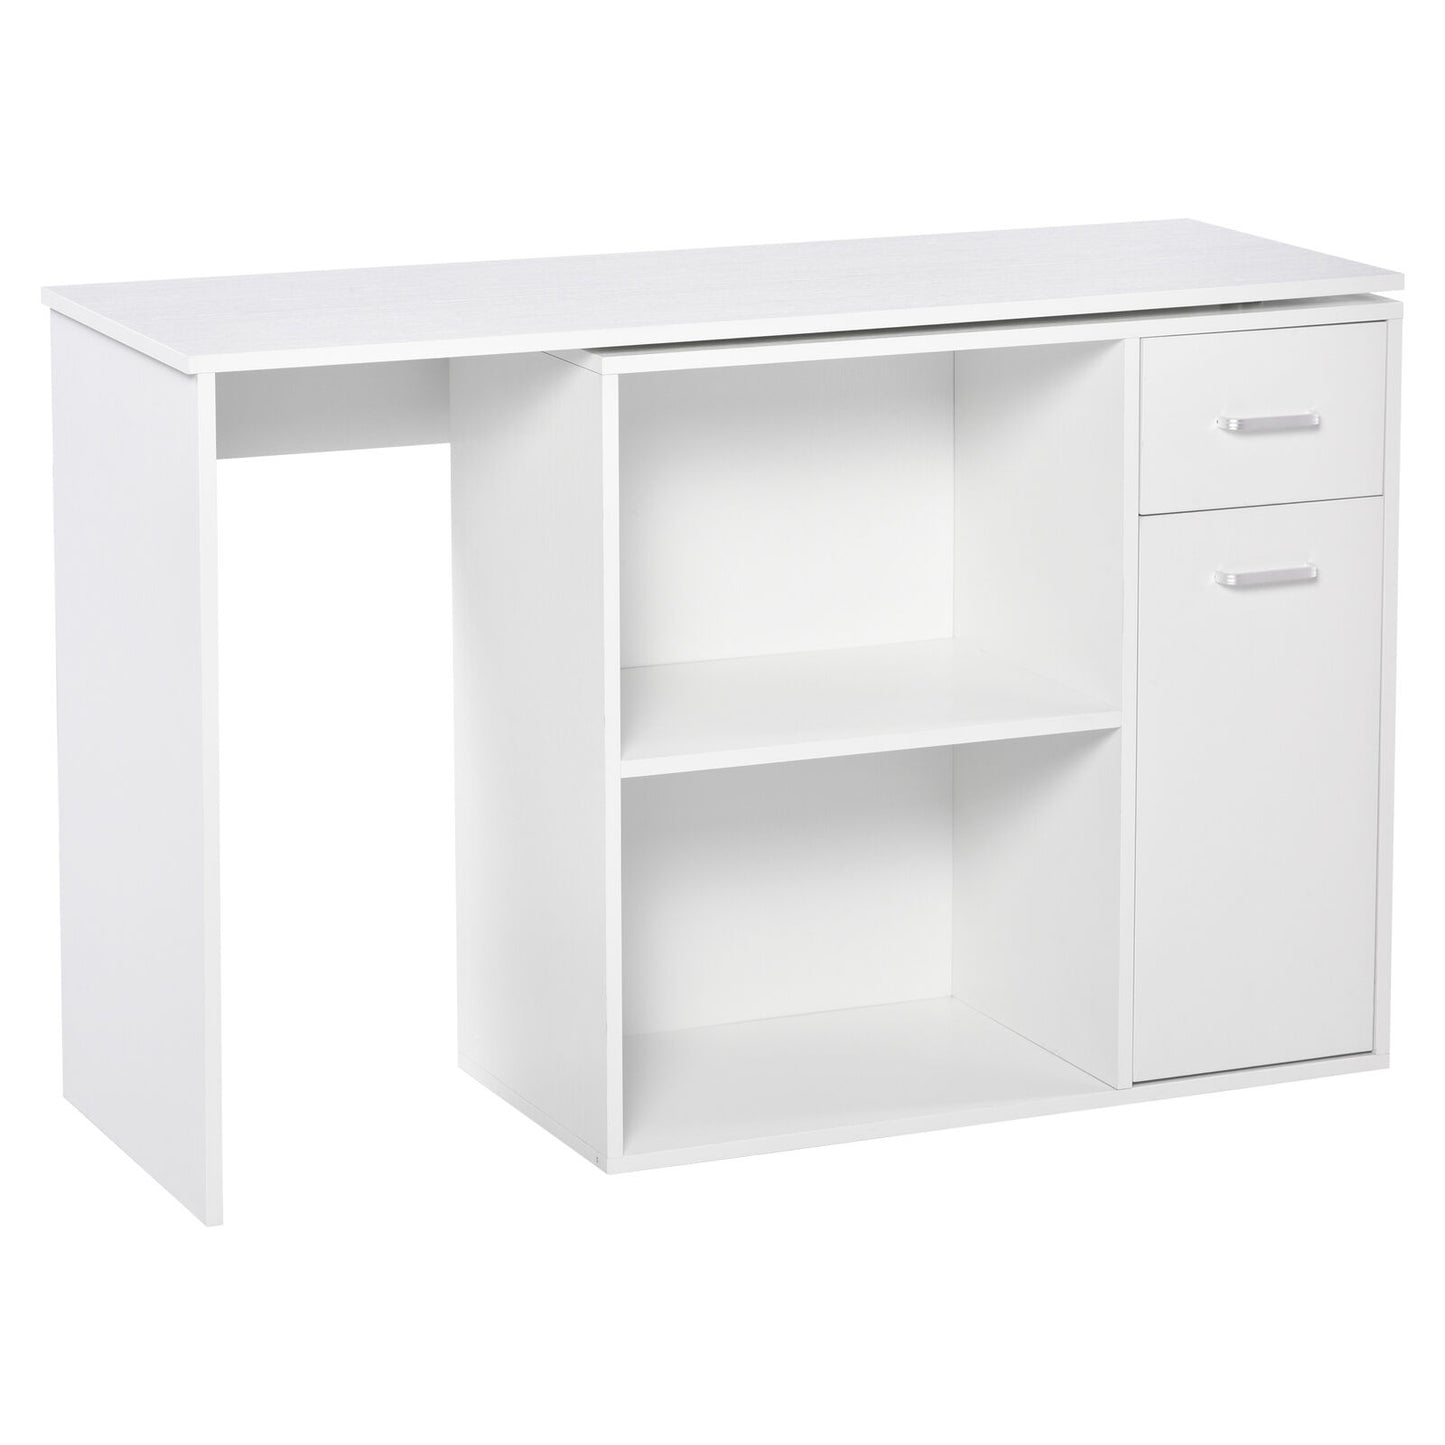 L Shaped Desk - 15.75 Inc L Desk Shape with Adjustable Swivel Features